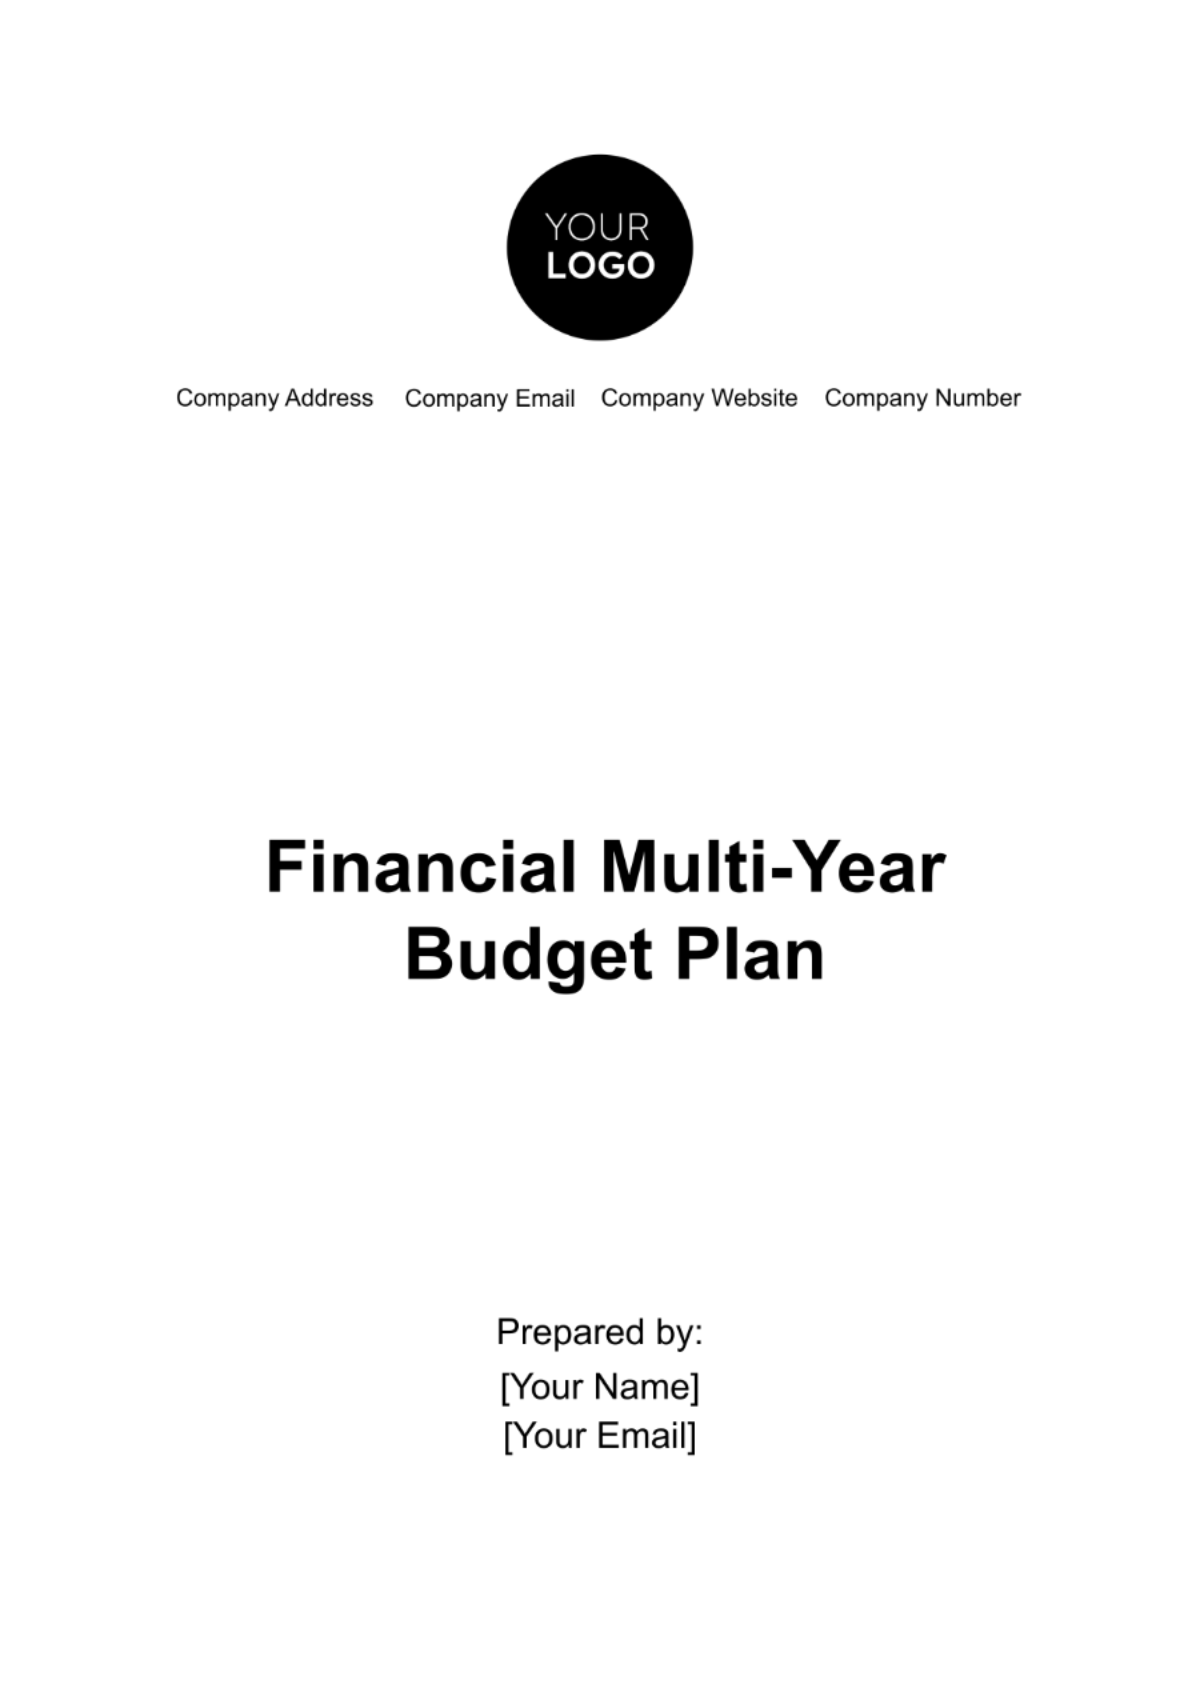 Finance Multi-Year Budget Plan Template